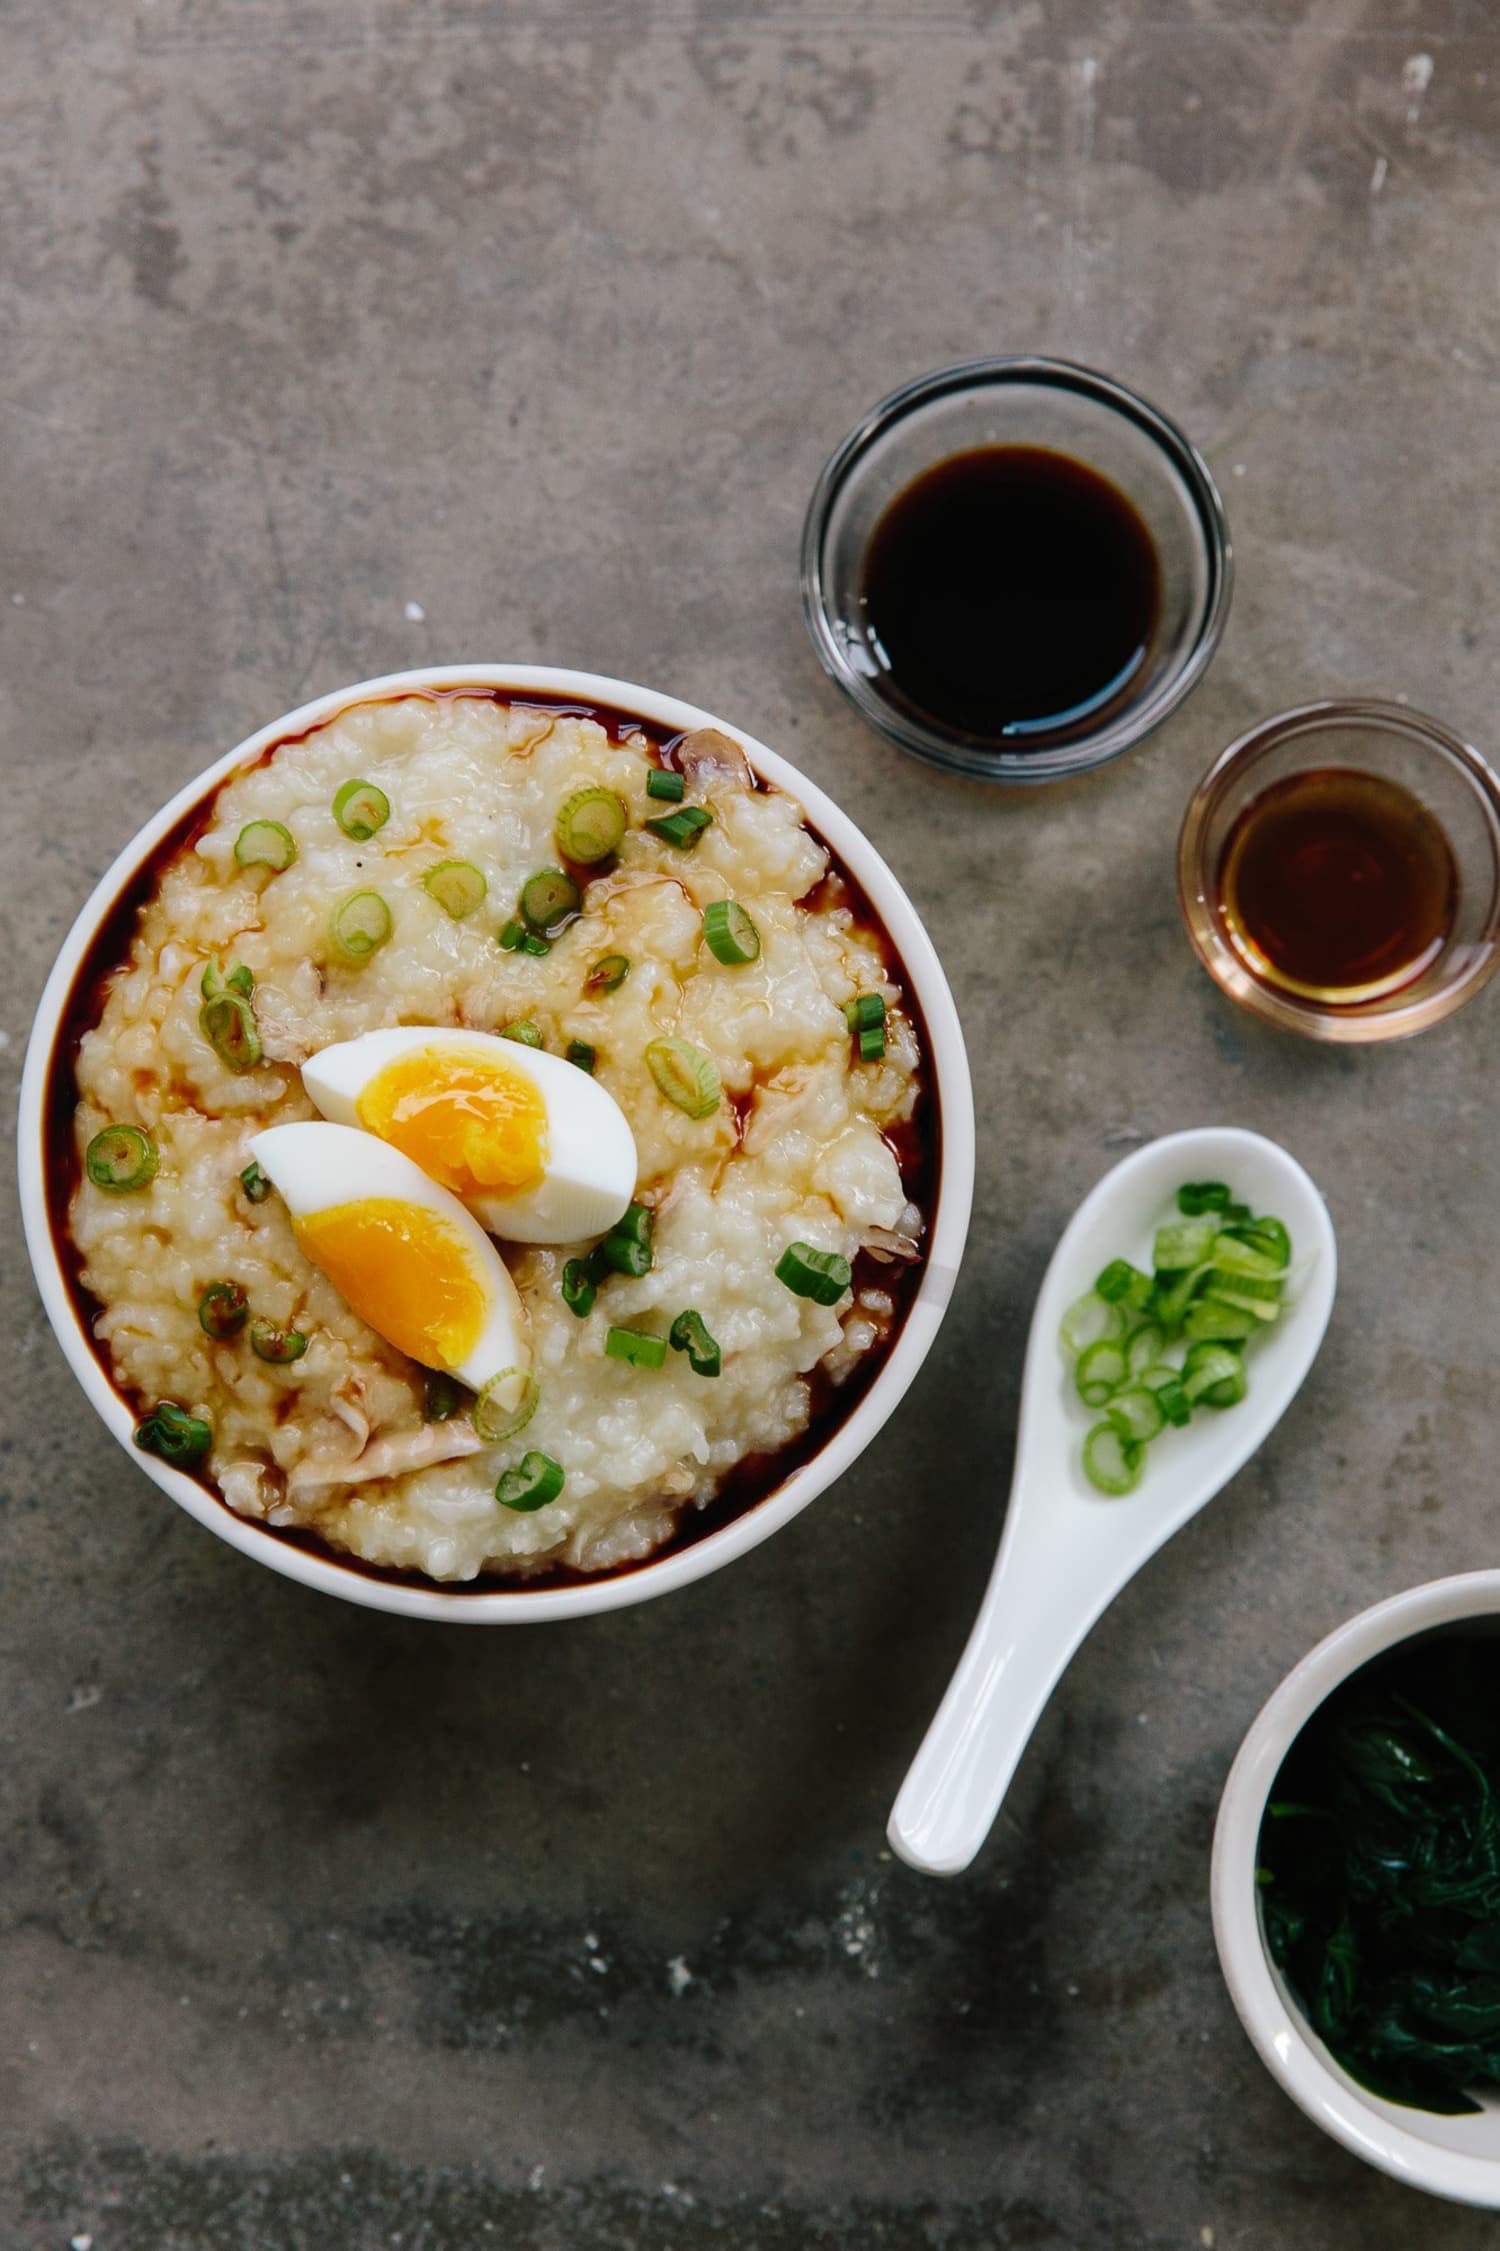 How To Make Congee Rice Porridge | Kitchn